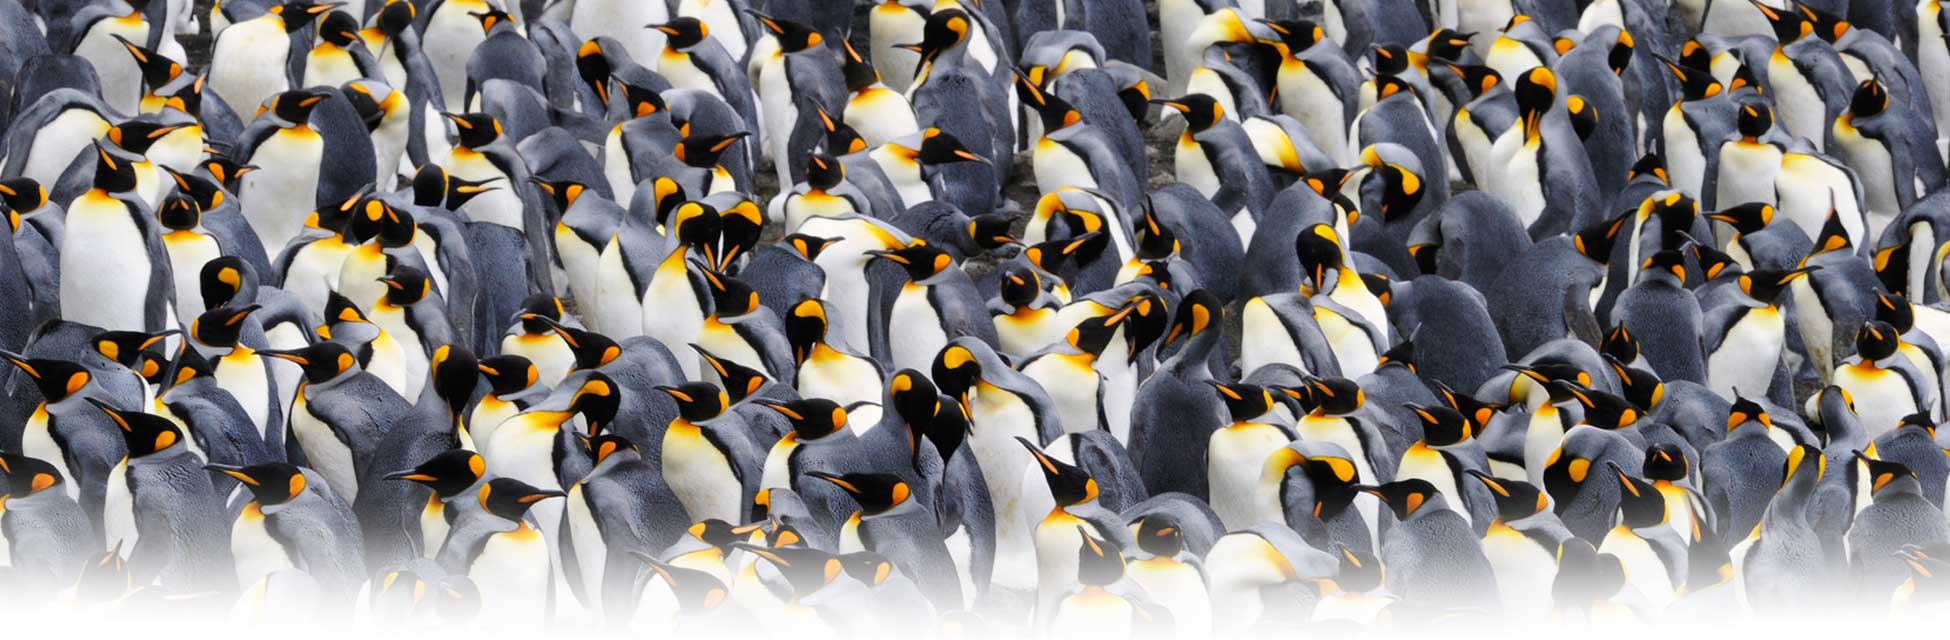 antarctica_pinguins2.jpg